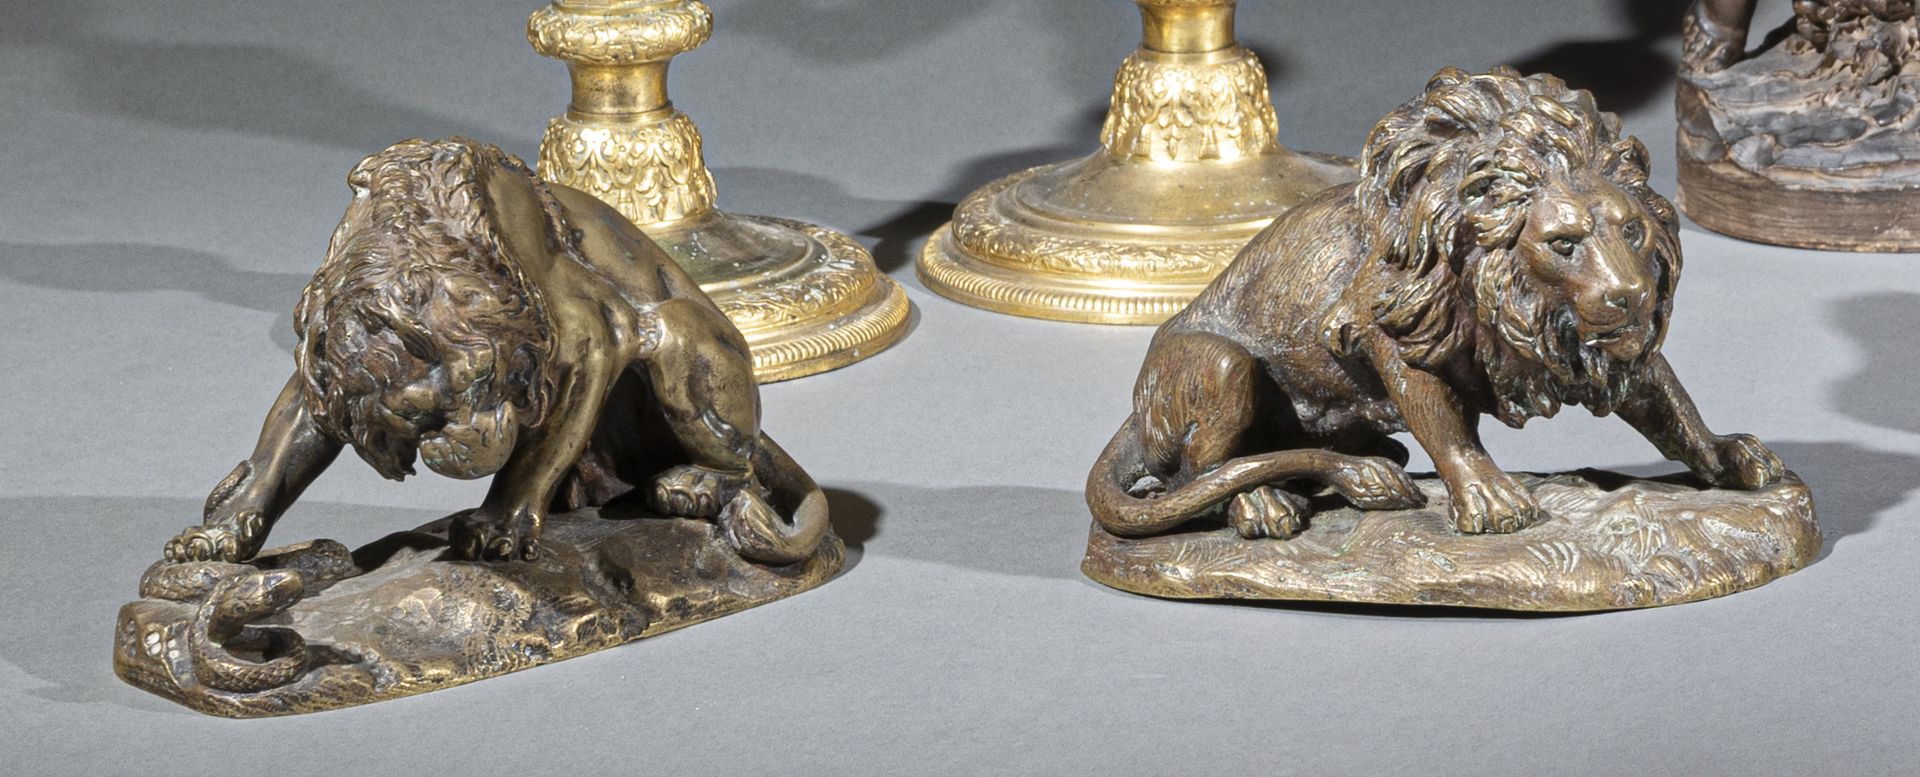 Null 安托万-路易-巴耶之后
静止的狮子和与蛇搏斗的狮子
两件青铜凿刻和鎏金的样板
19世纪
长17厘米
已磨损